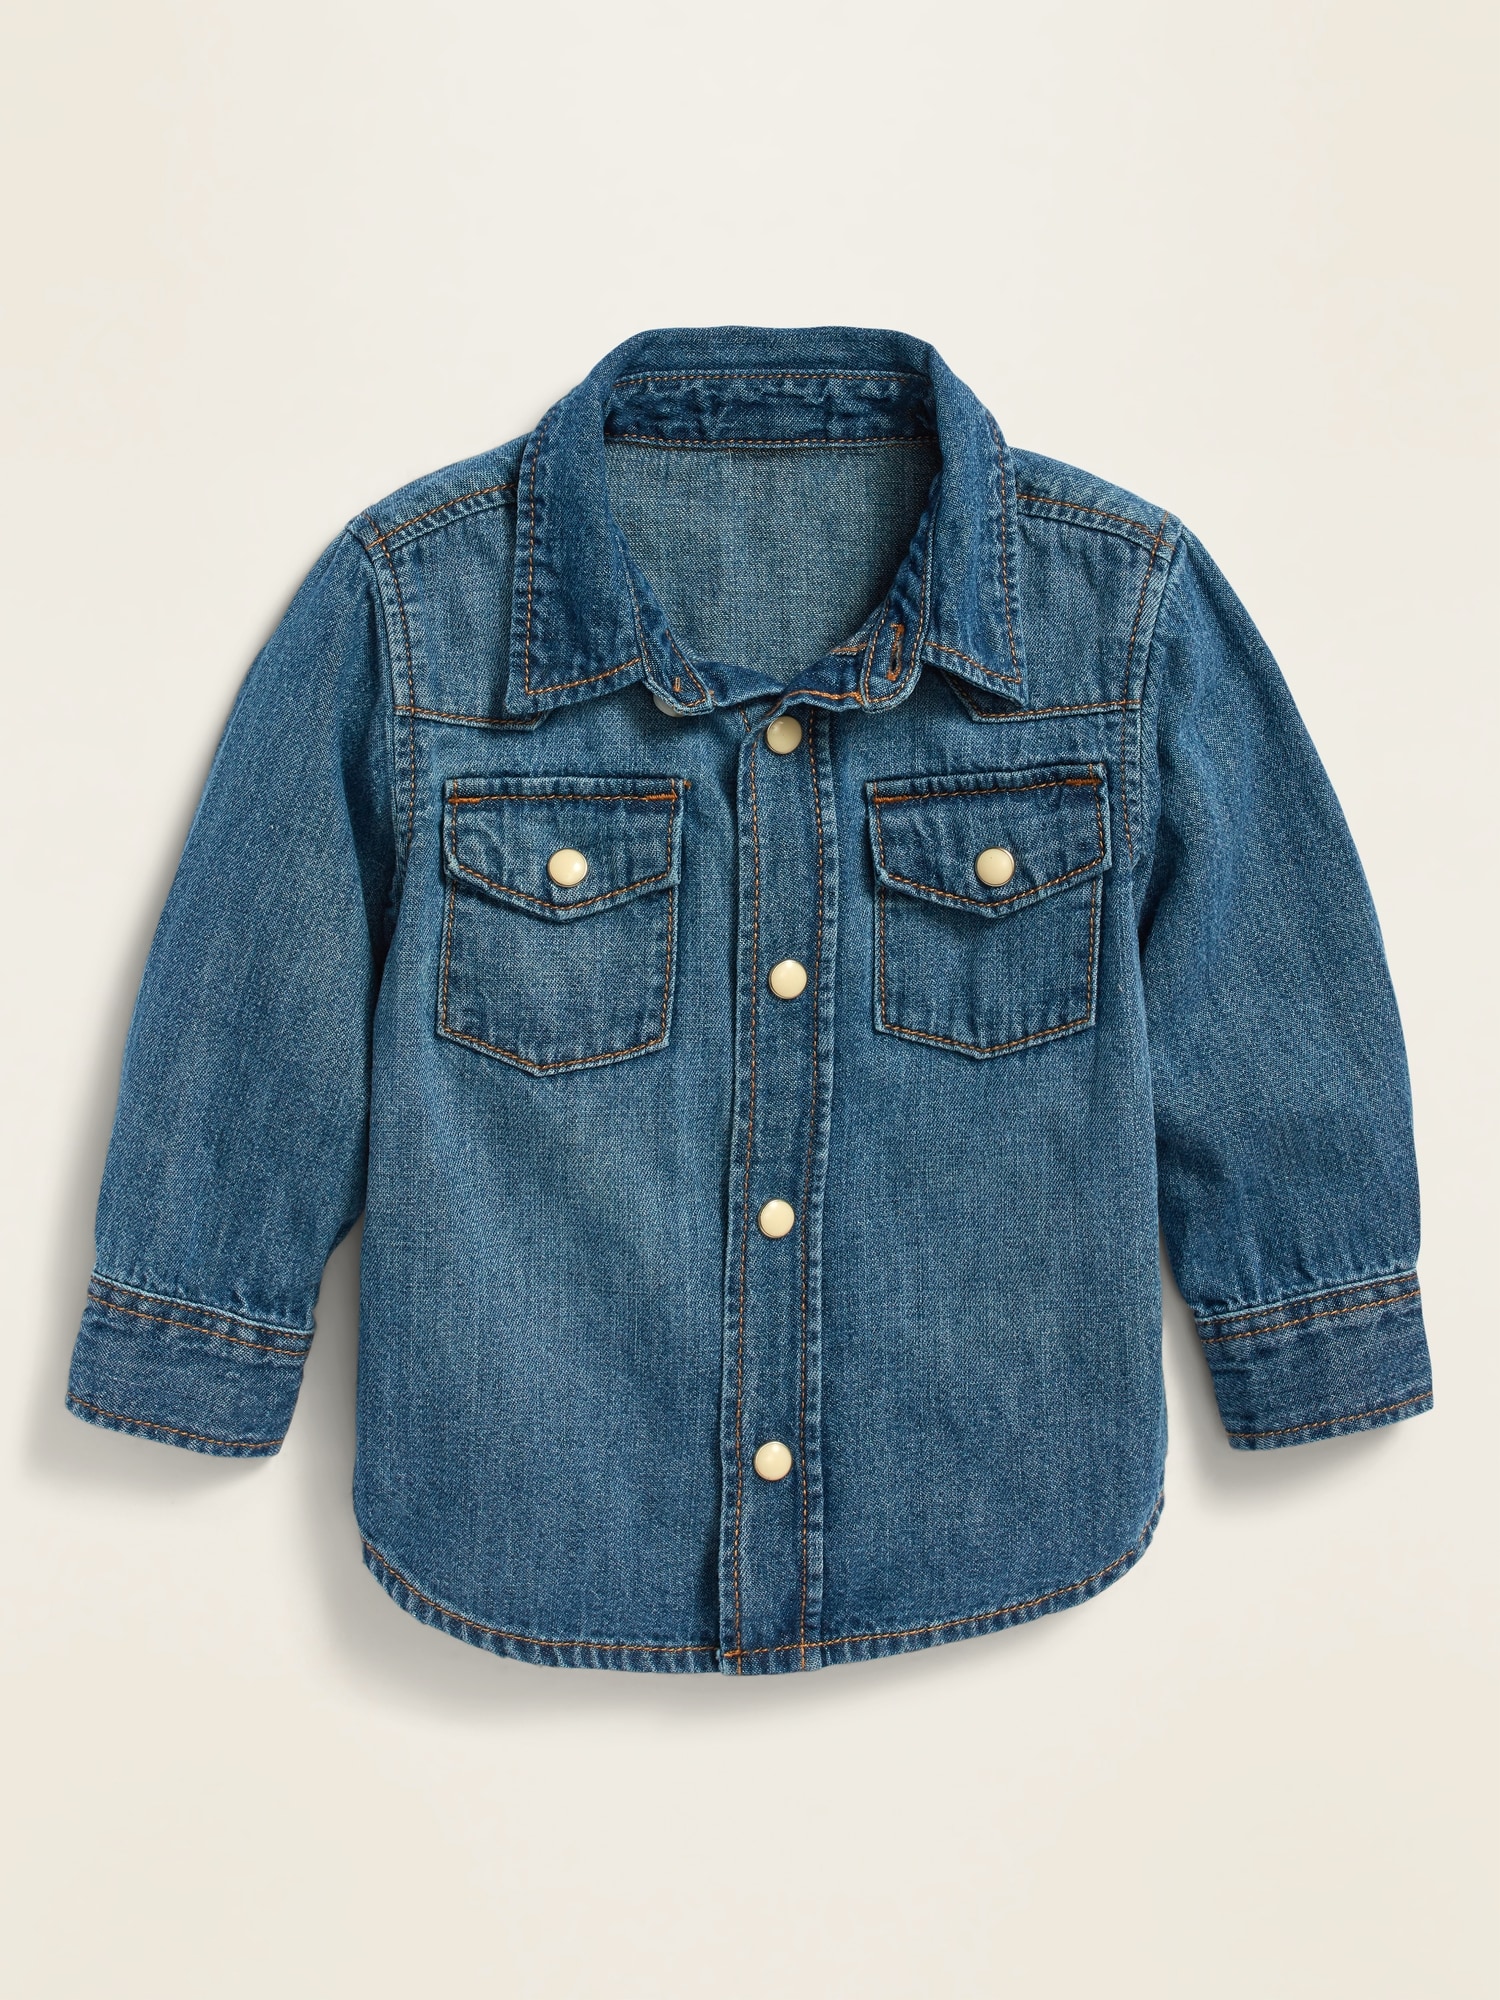 Medium-Wash Jean Shirt for Baby | Old Navy